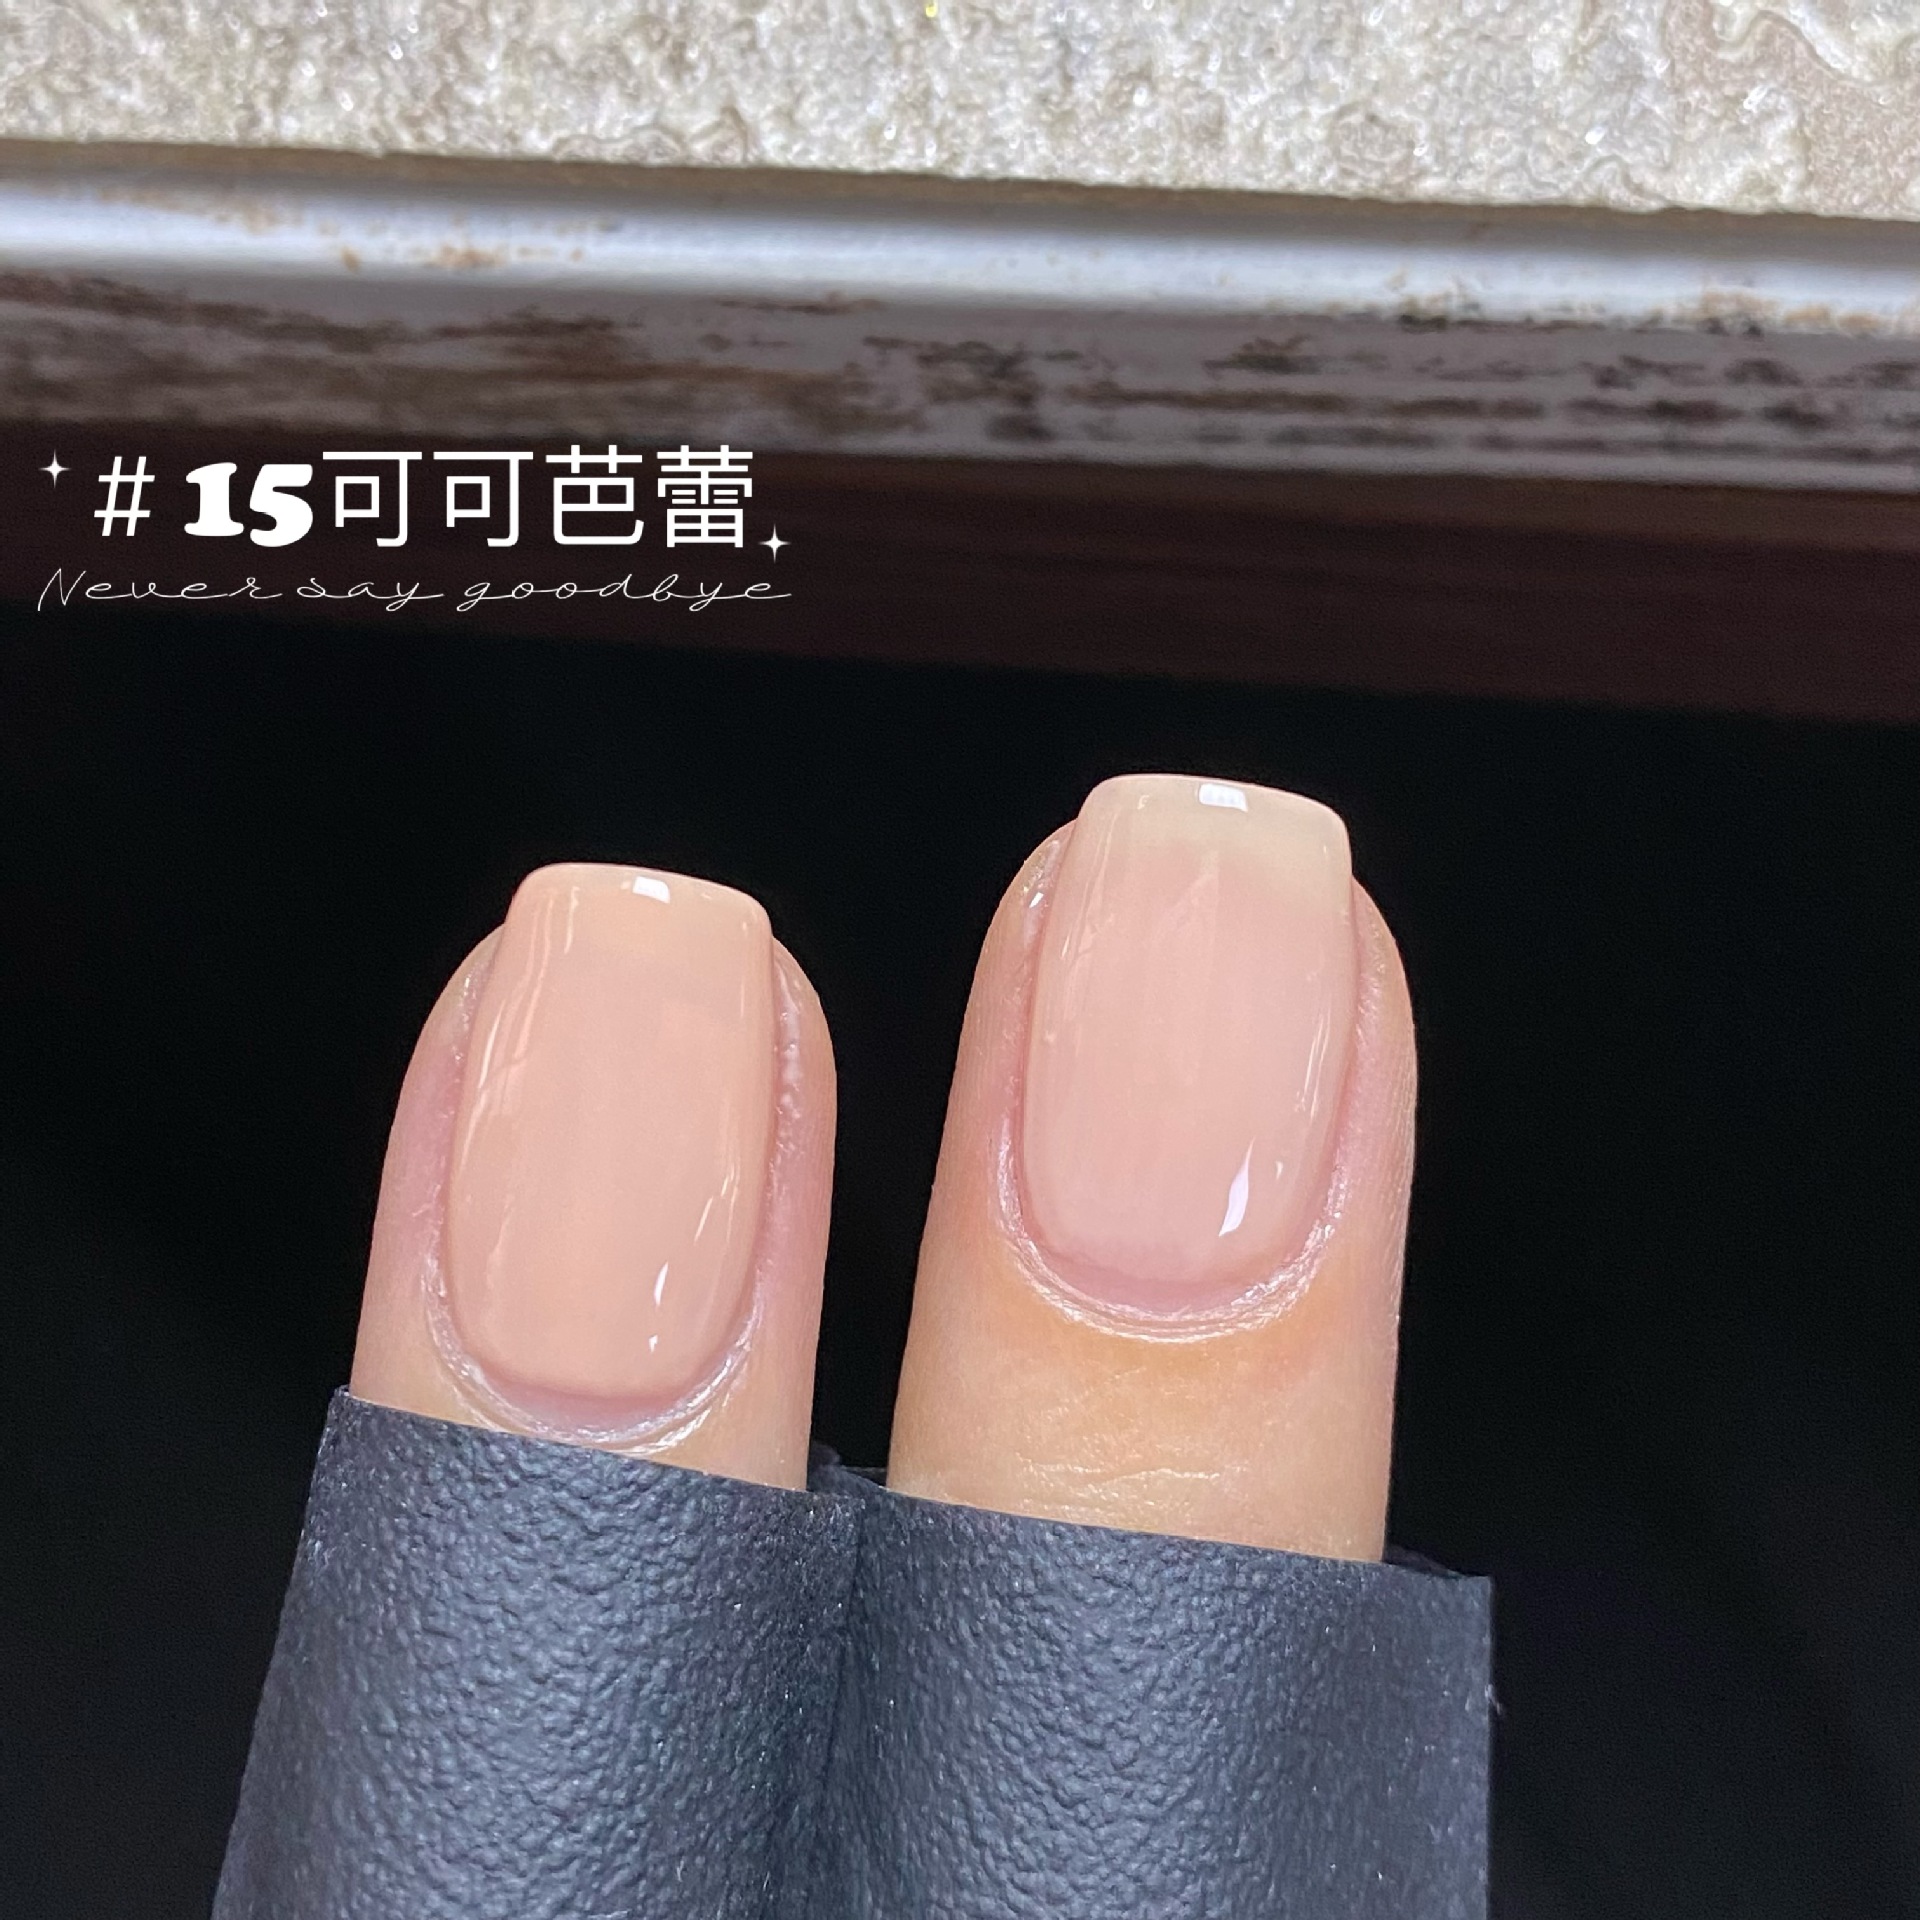 Special price shows white milk tea nude translucent nail polish glue set Japanese style can glue wear nail versatile nail art base